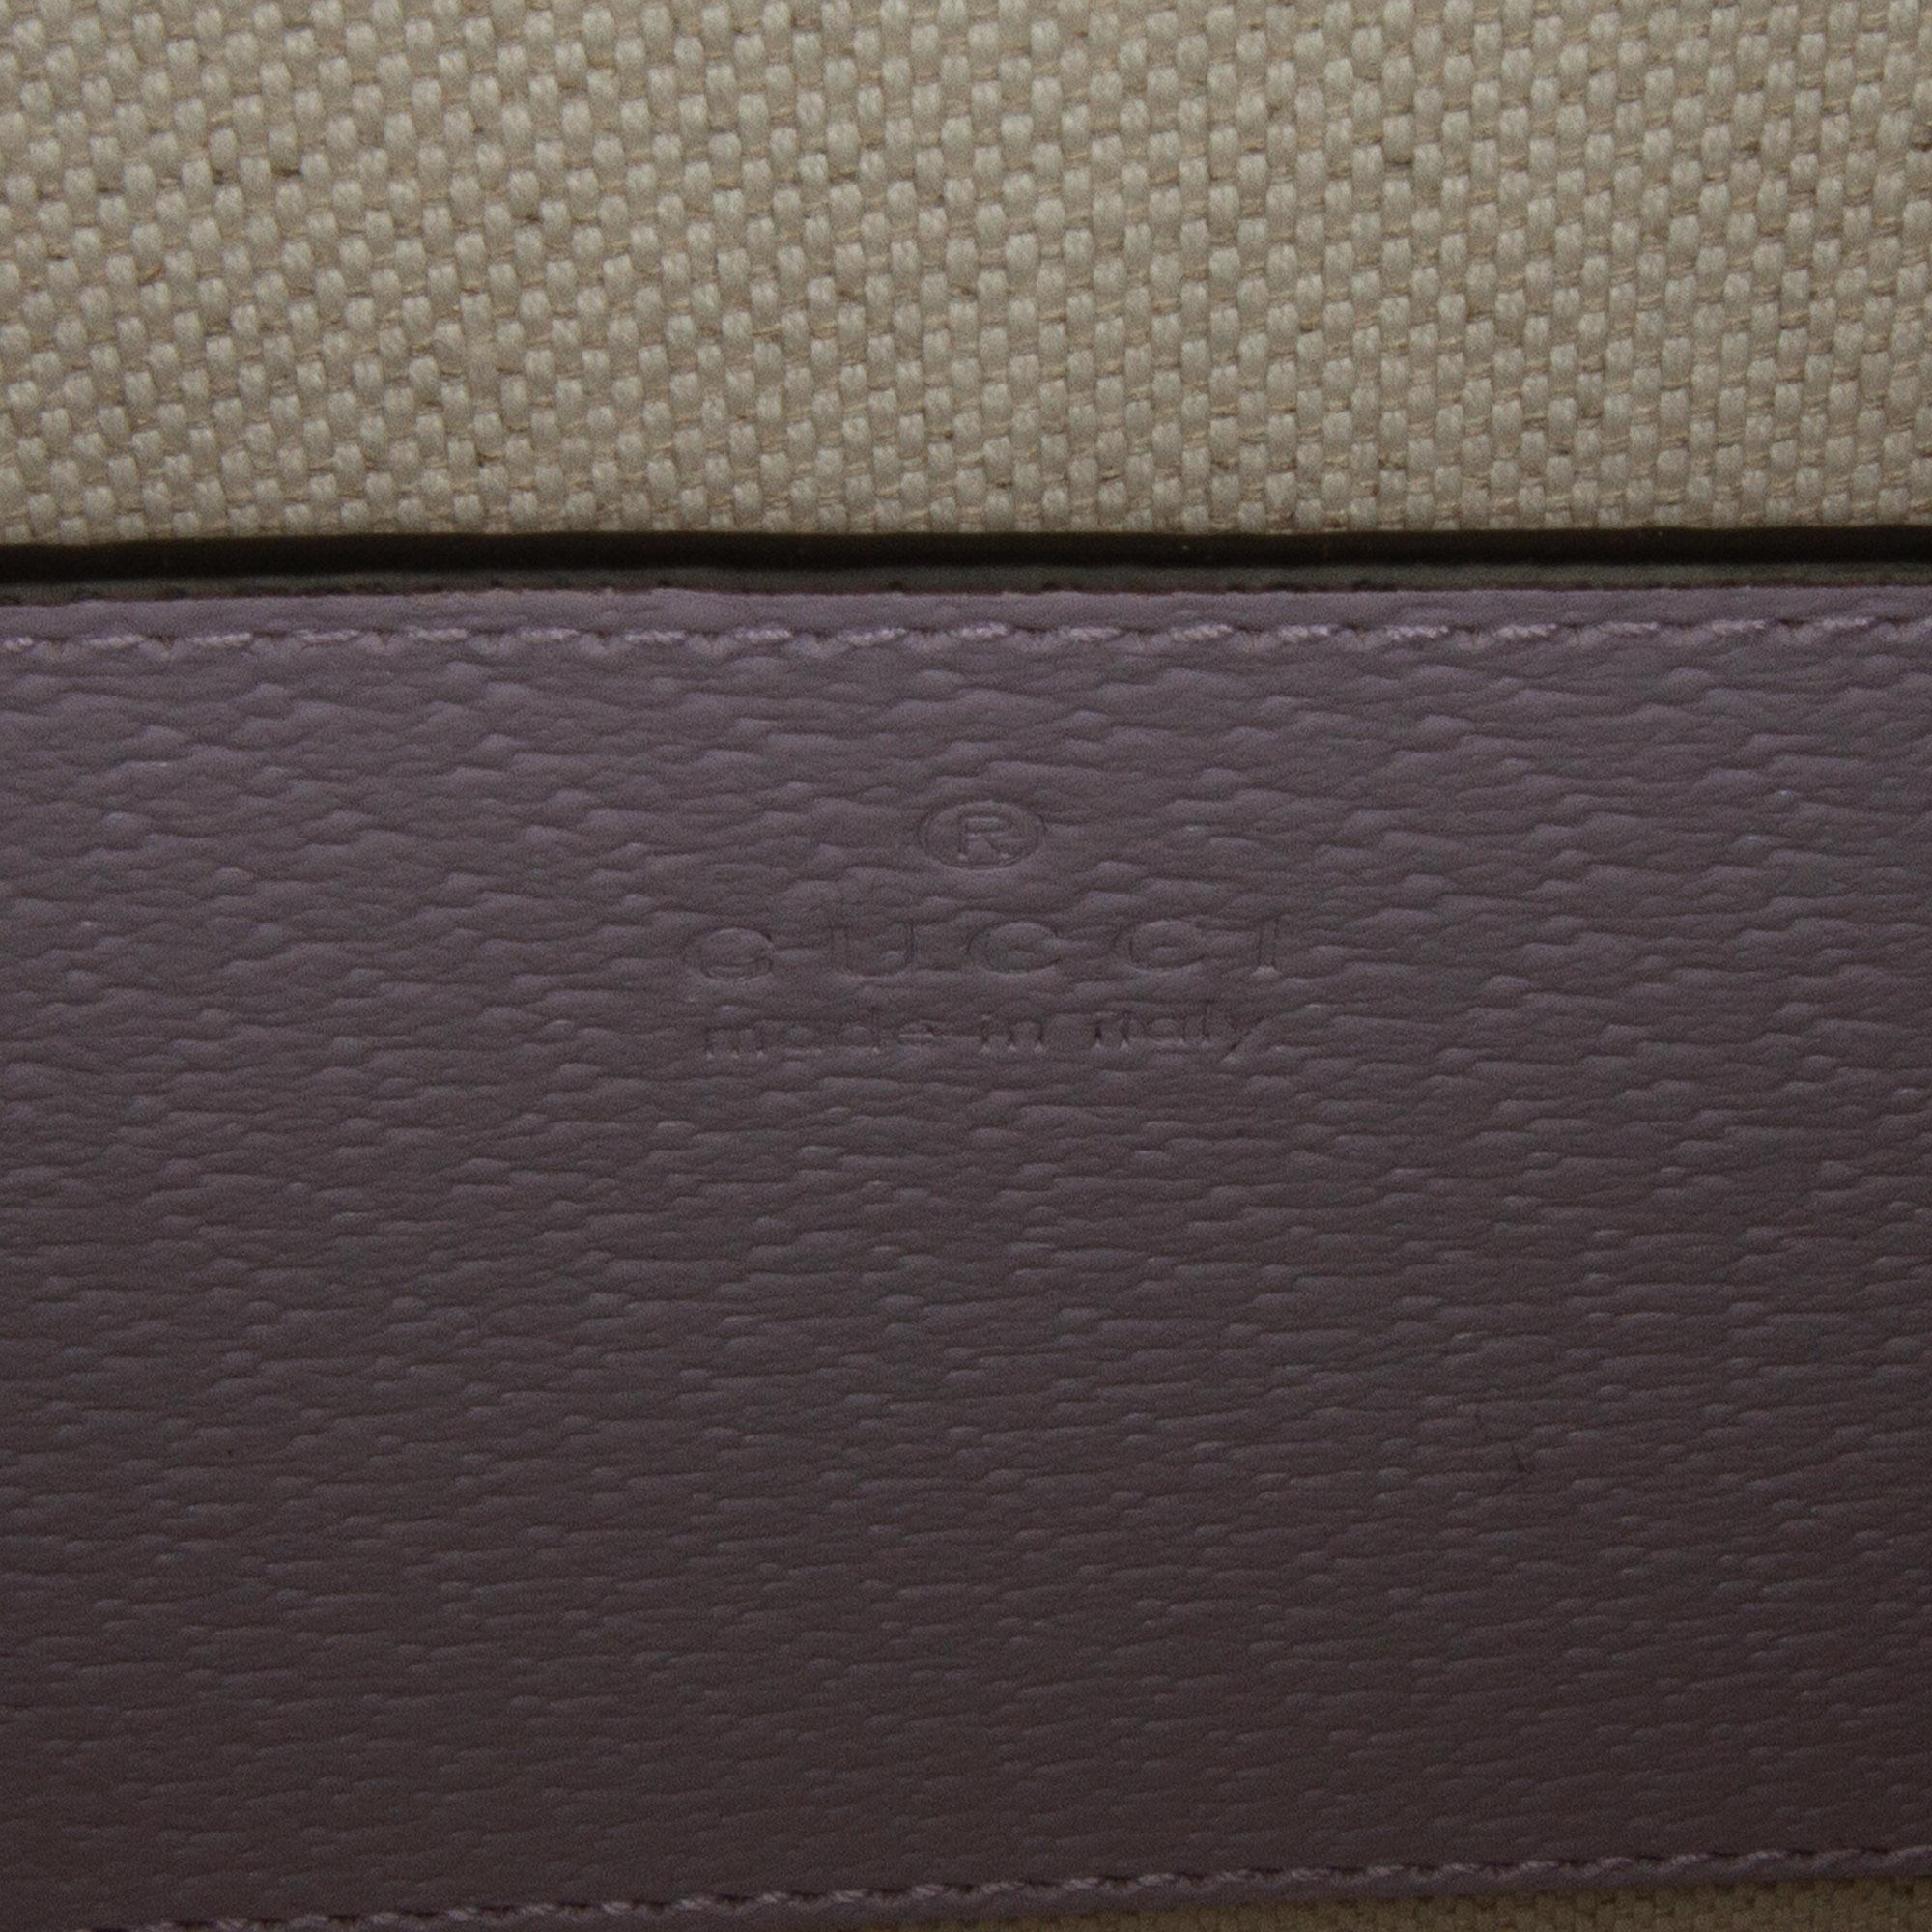 Gucci Purple/Beige Small Jumbo GG Web Ophidia Crossbody Bag